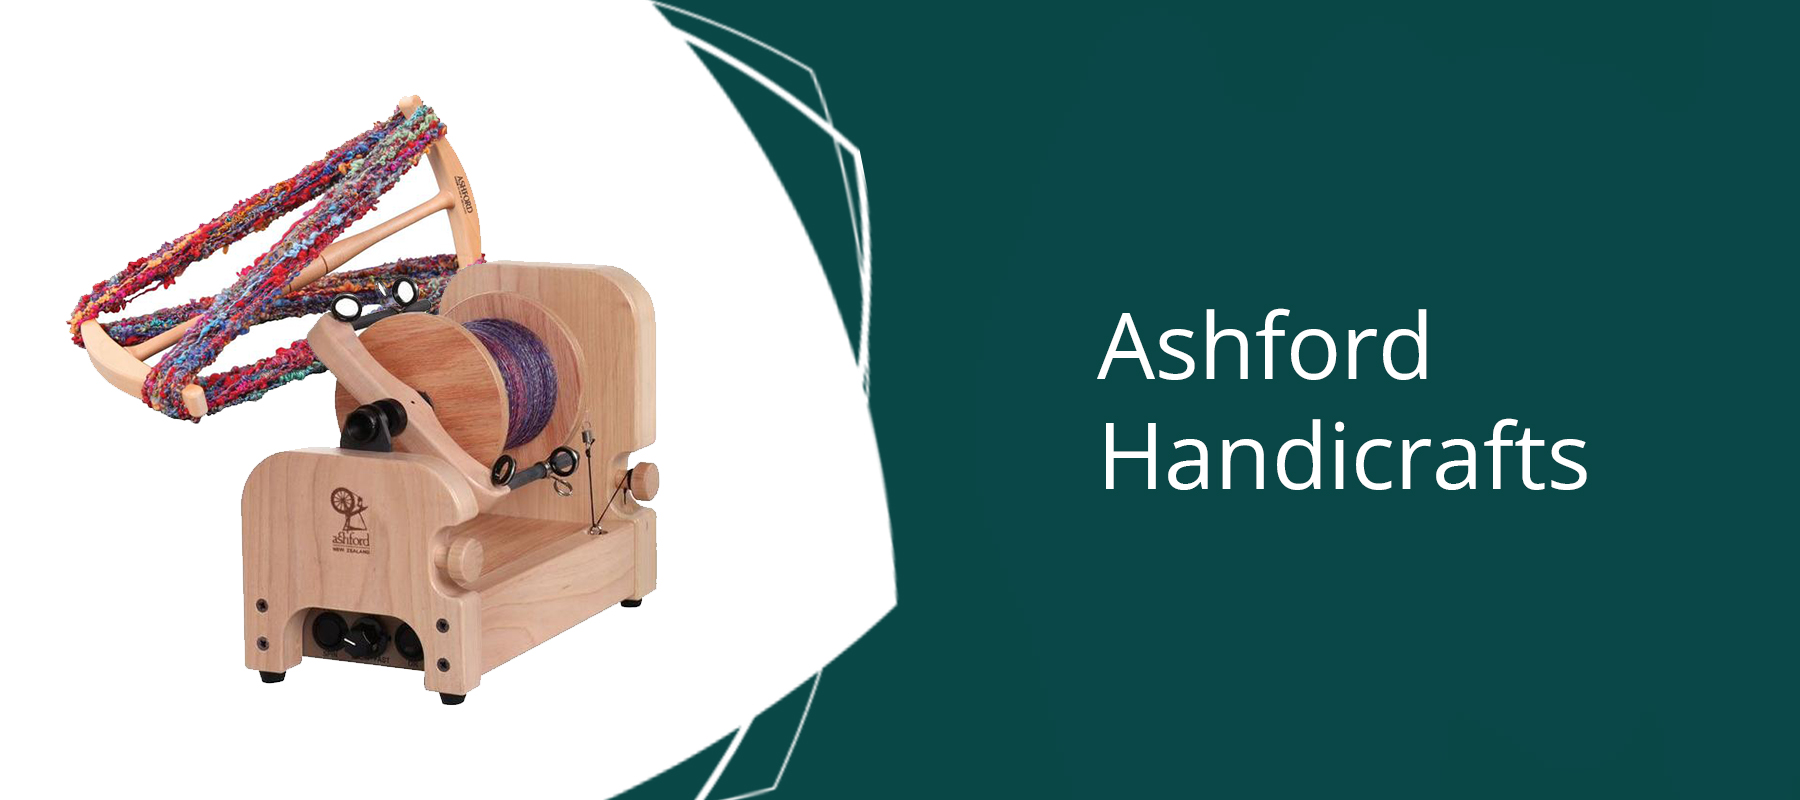 Ashford Handicrafts - Thread Collective Australia 